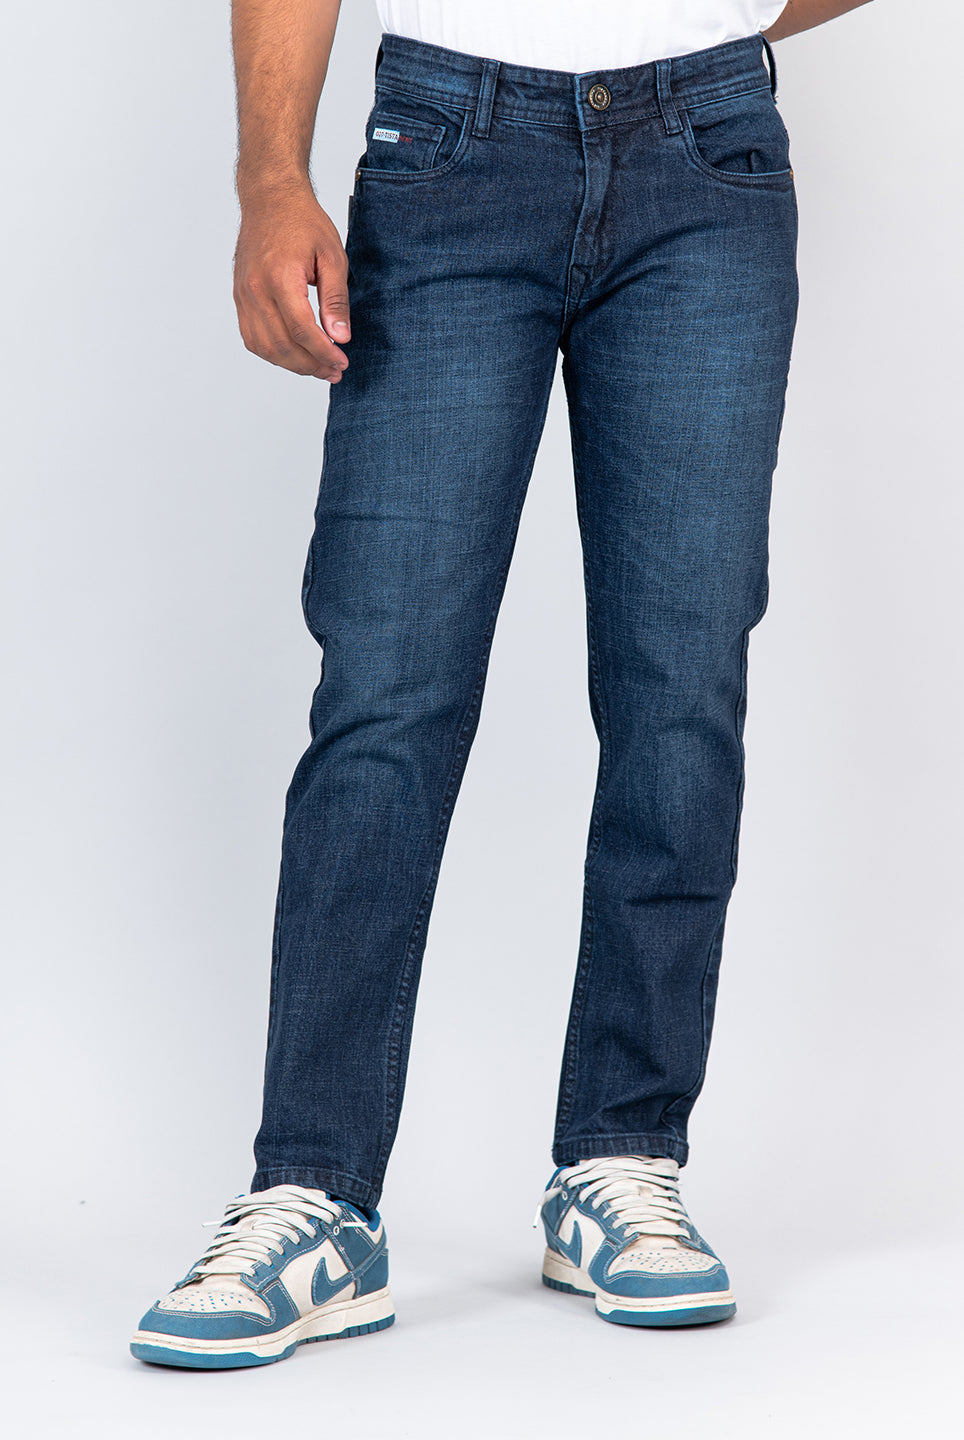 Buy Dark Blue Ankle Fit Denim Jeans Online